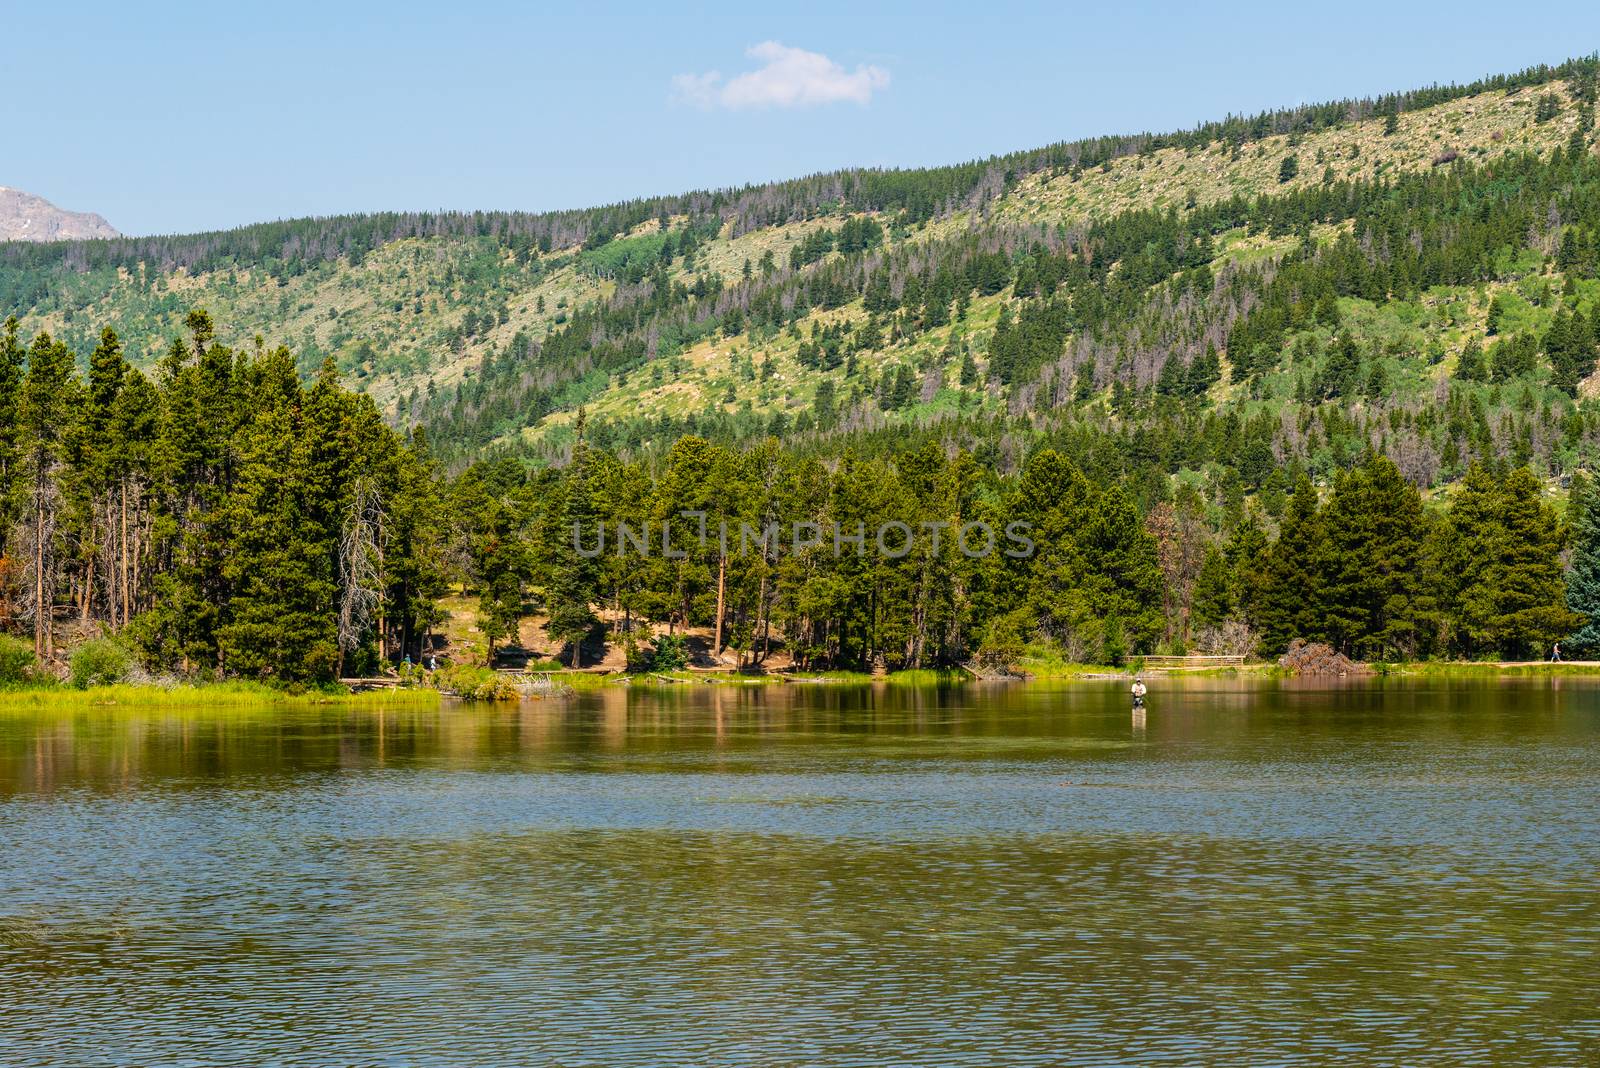 Sprague Lake Trail in Rocky Mountain National Park, Colorado by Njean